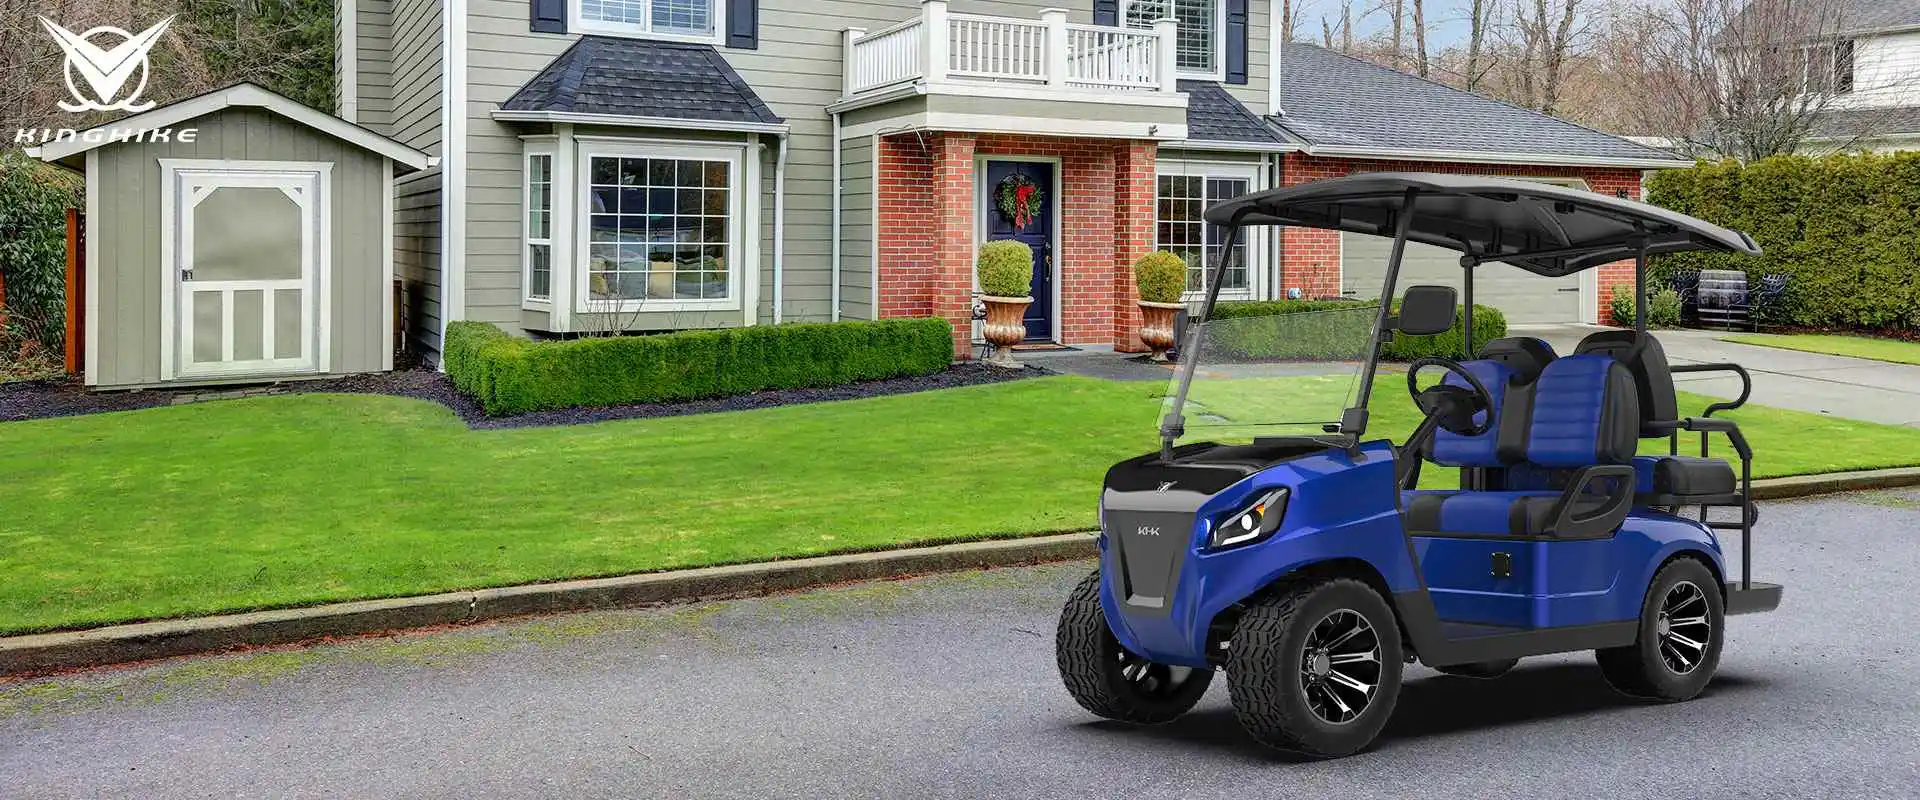 Golf Car elettrica, veicoli utilitari elettrici